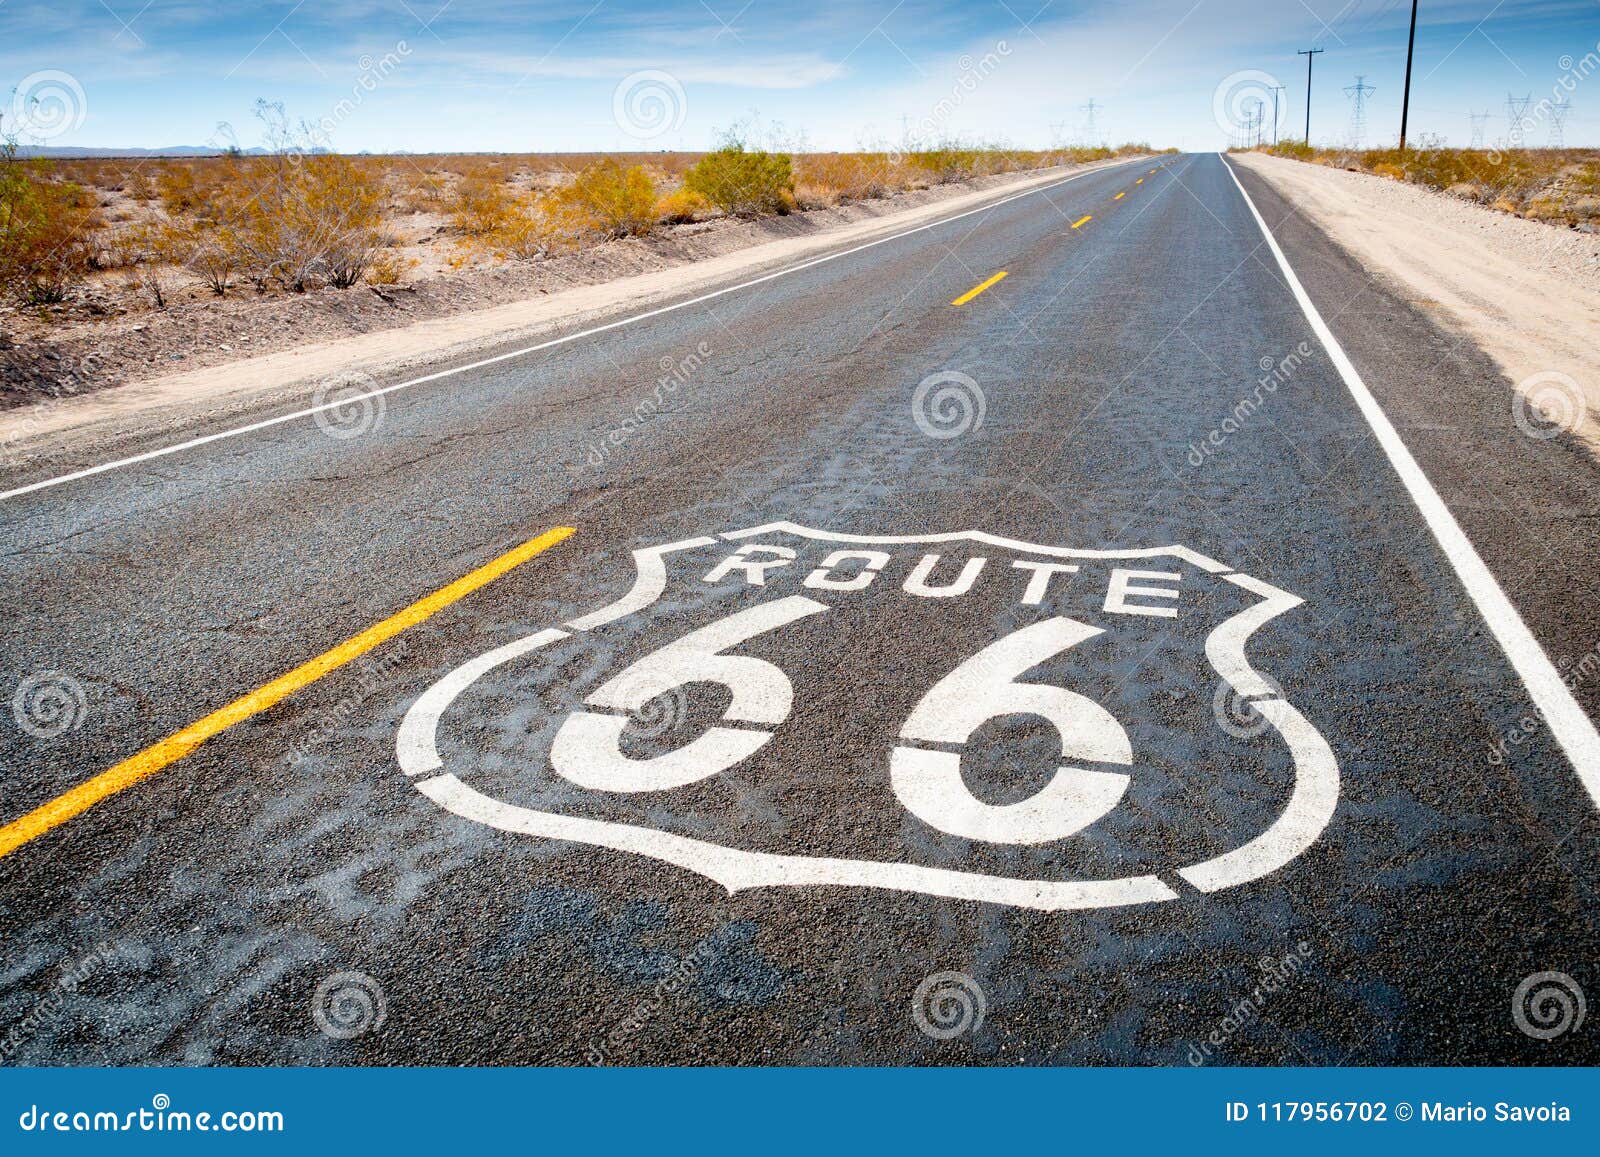 route 66 road sign in daggett